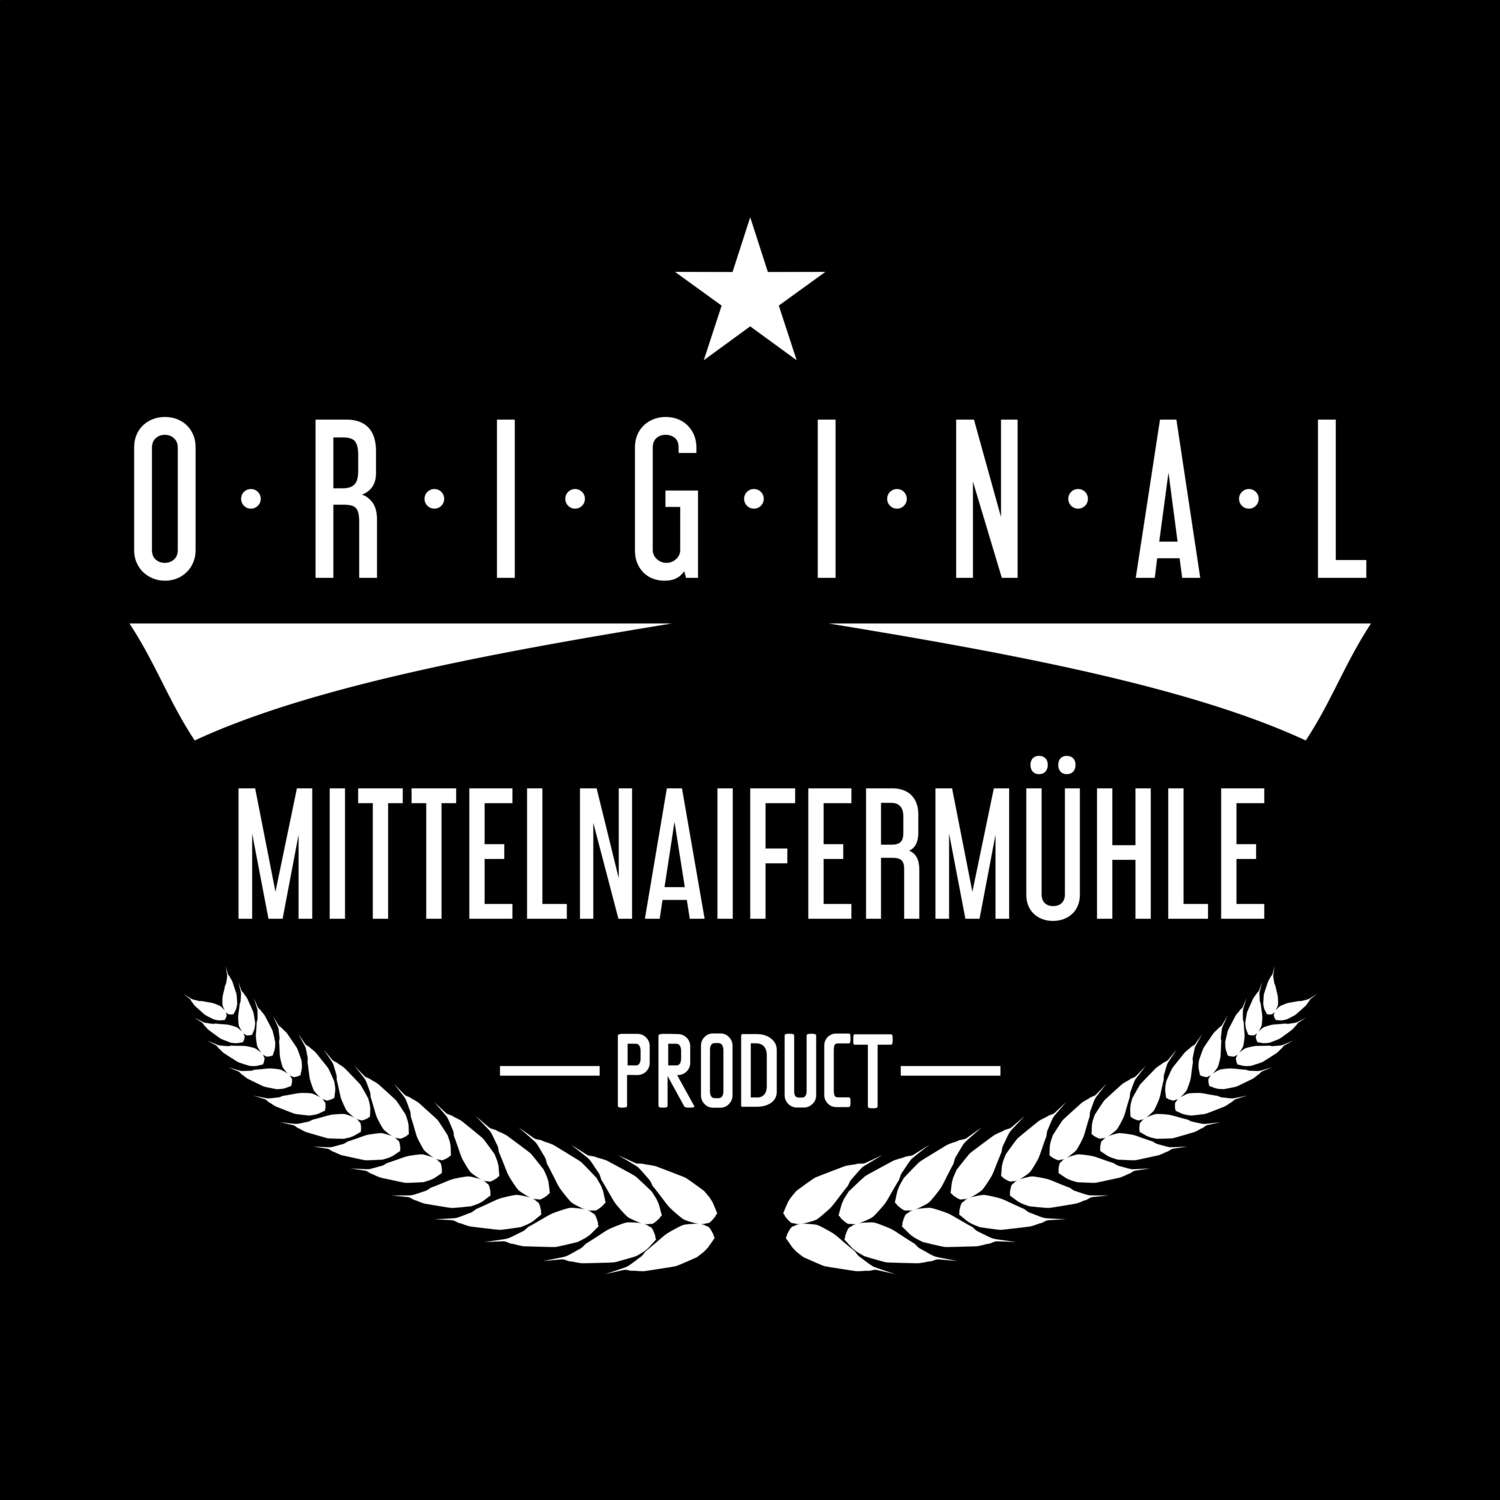 Mittelnaifermühle T-Shirt »Original Product«